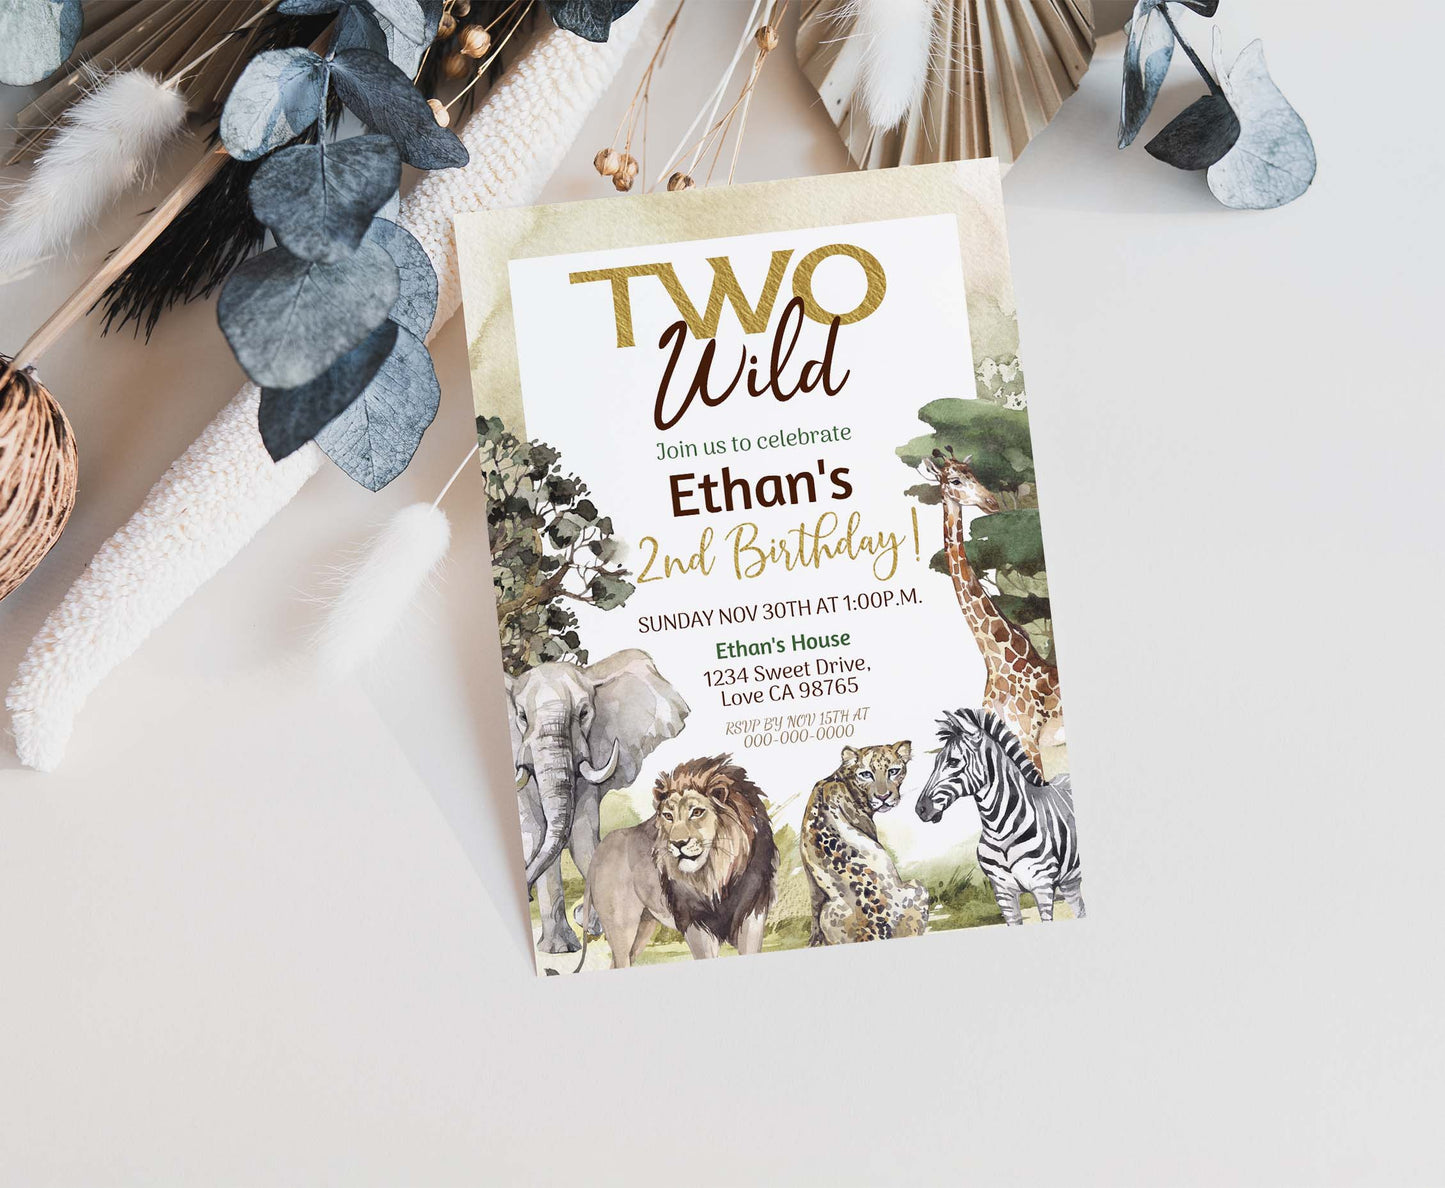 Two wild Birthday Invitation | Safari 2nd birthday Party Invite - 35I